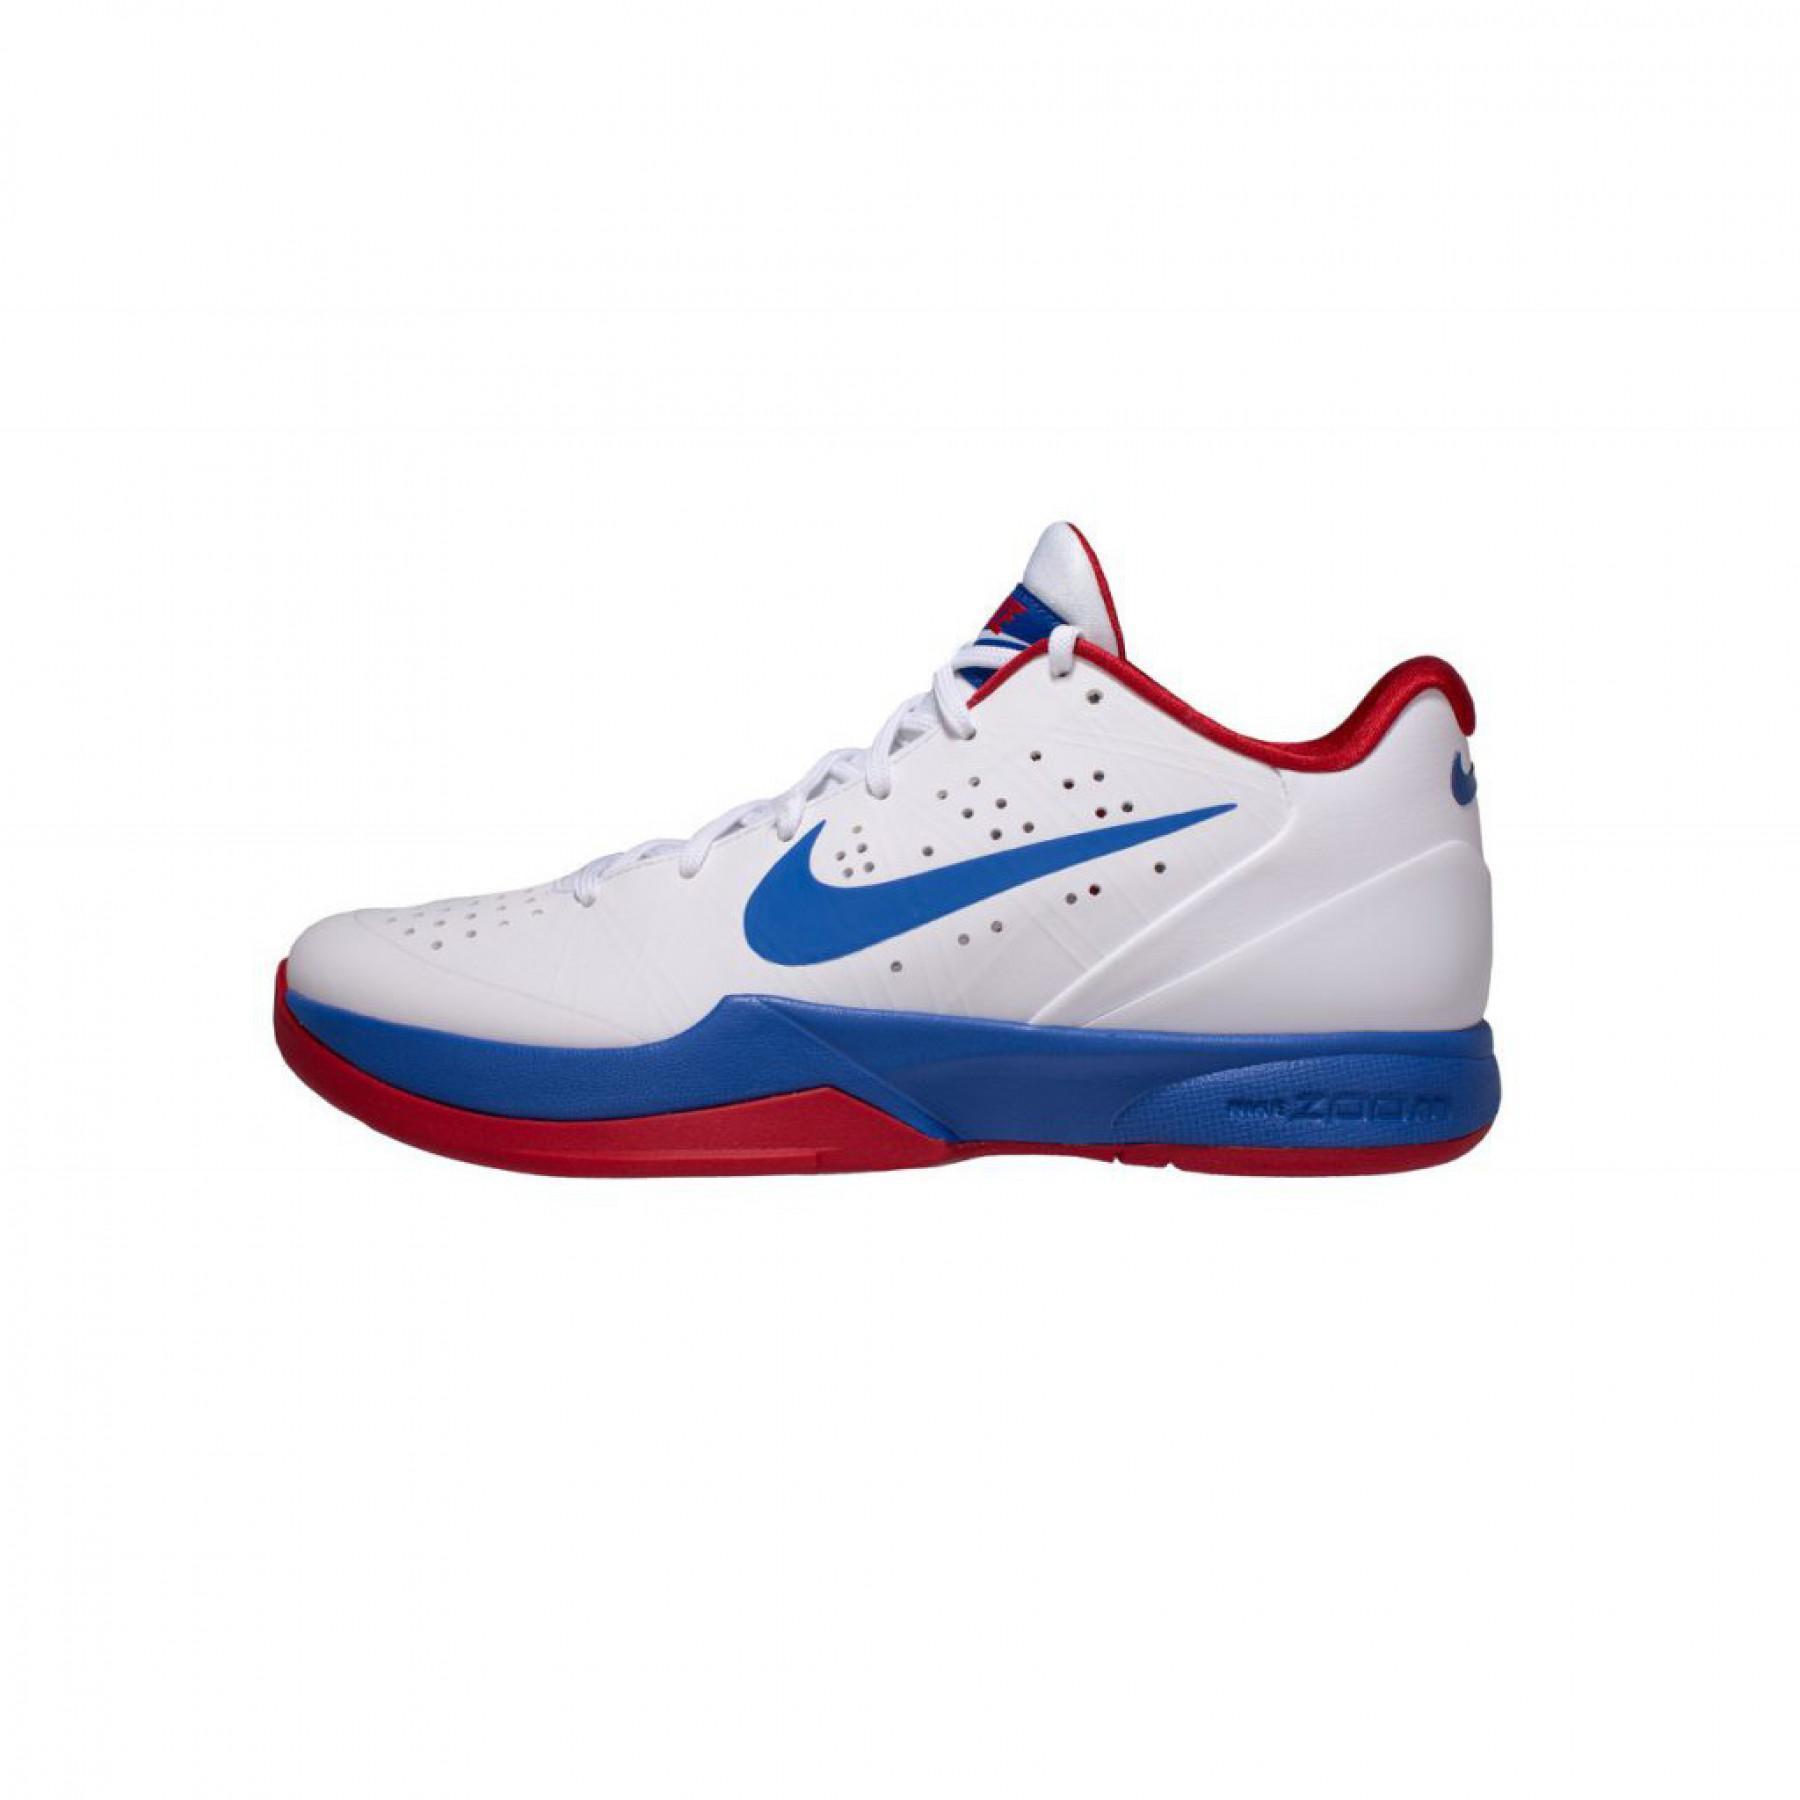 Shoes Nike Air Zoom HyperAttack blanc/bleu royal/rouge